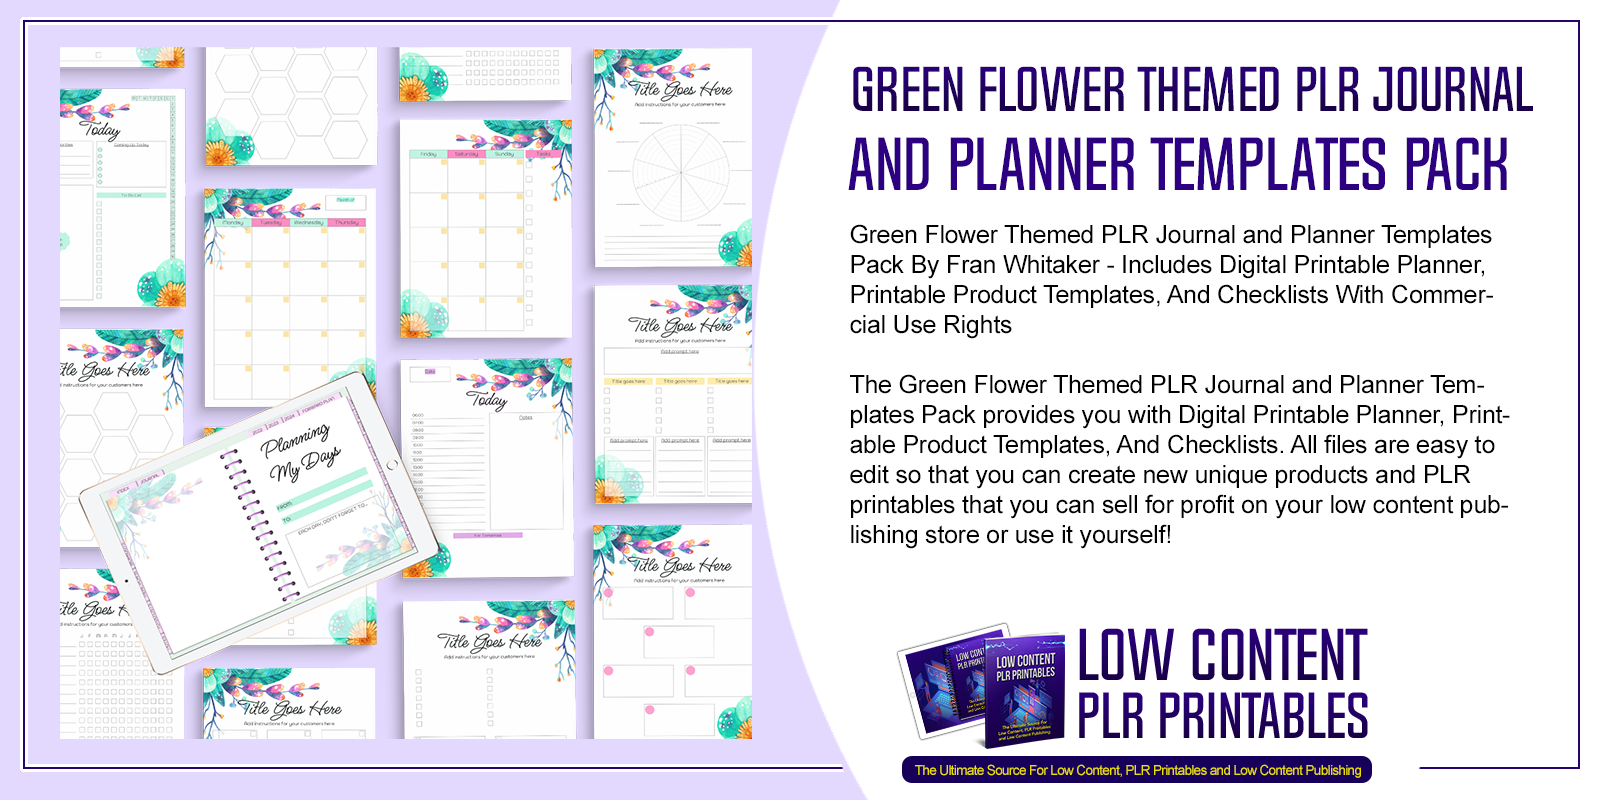 Green Flower Themed PLR Journal and Planner Templates Pack 2